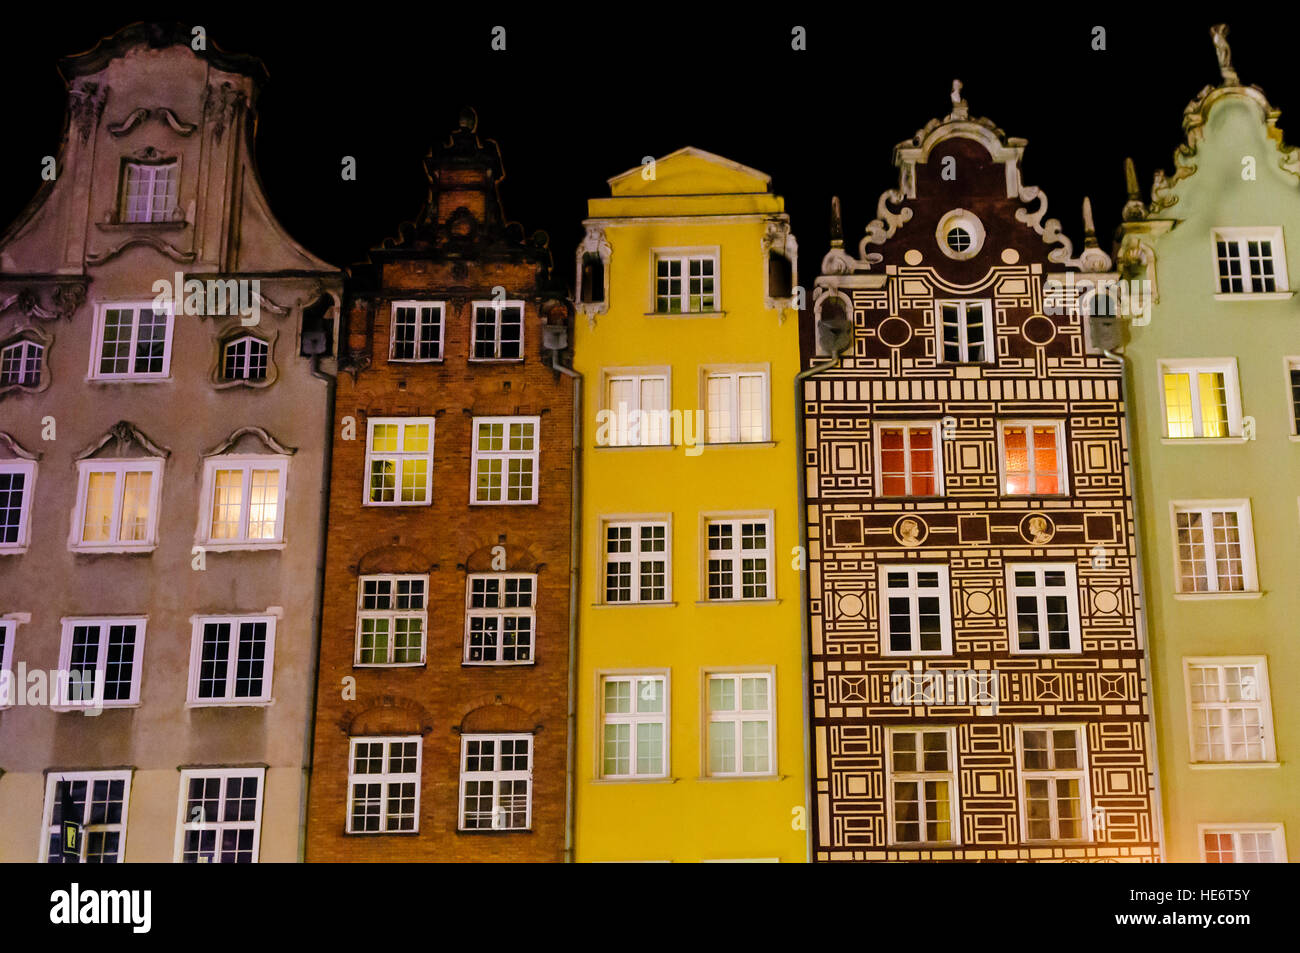 Buildings in Dluga, Dlugi Targ, Gdansk at night Stock Photo